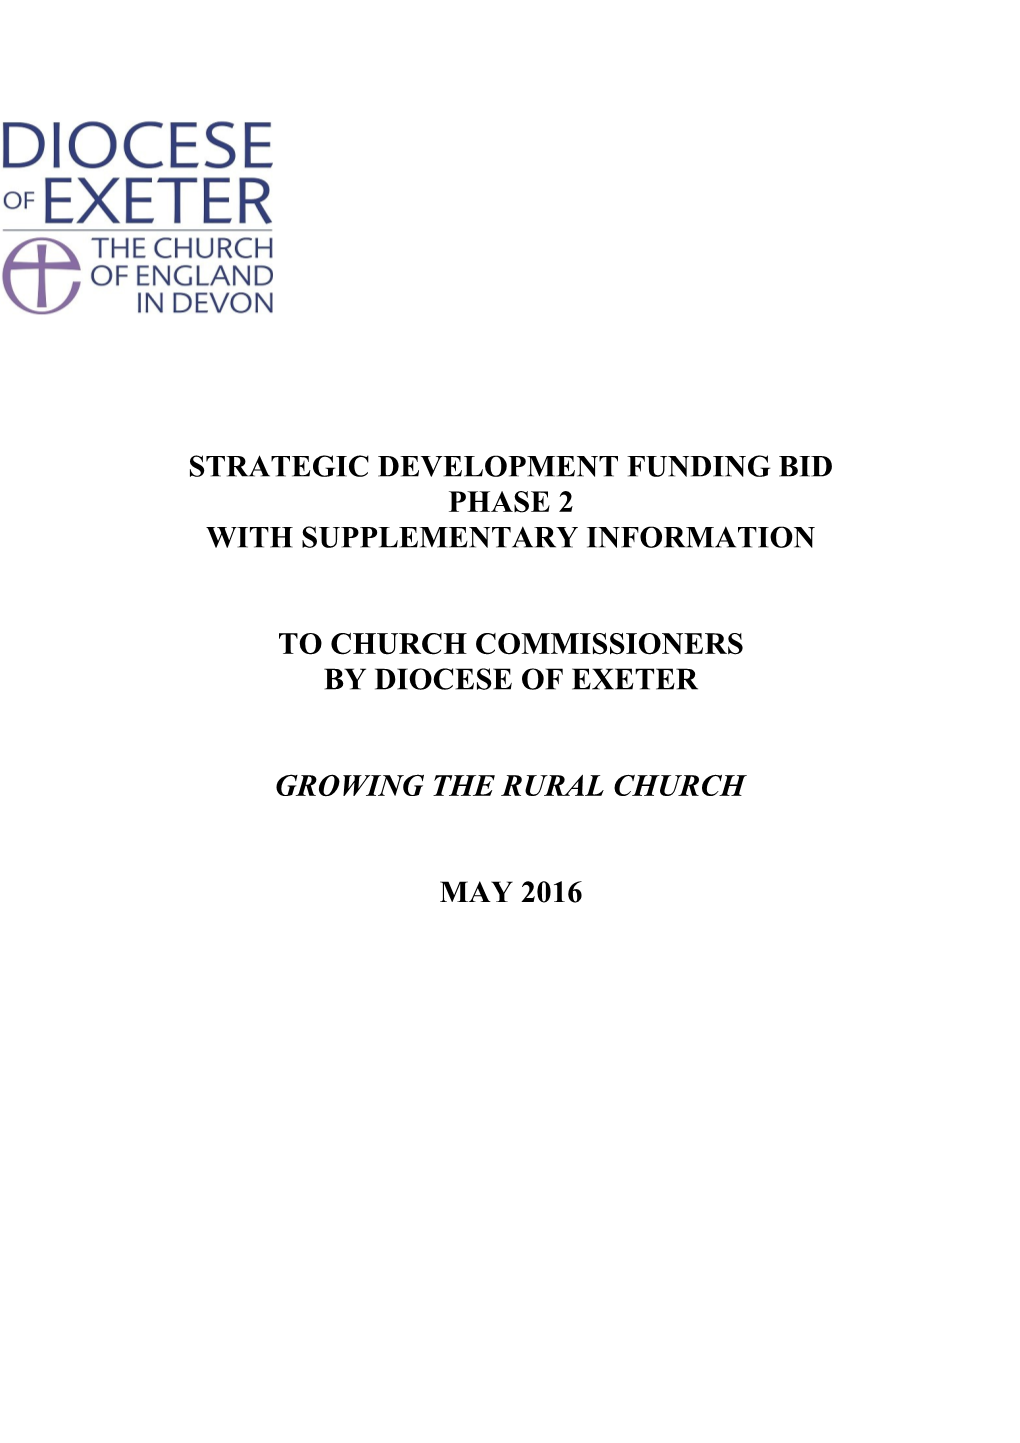 Strategic Development Funding Bid